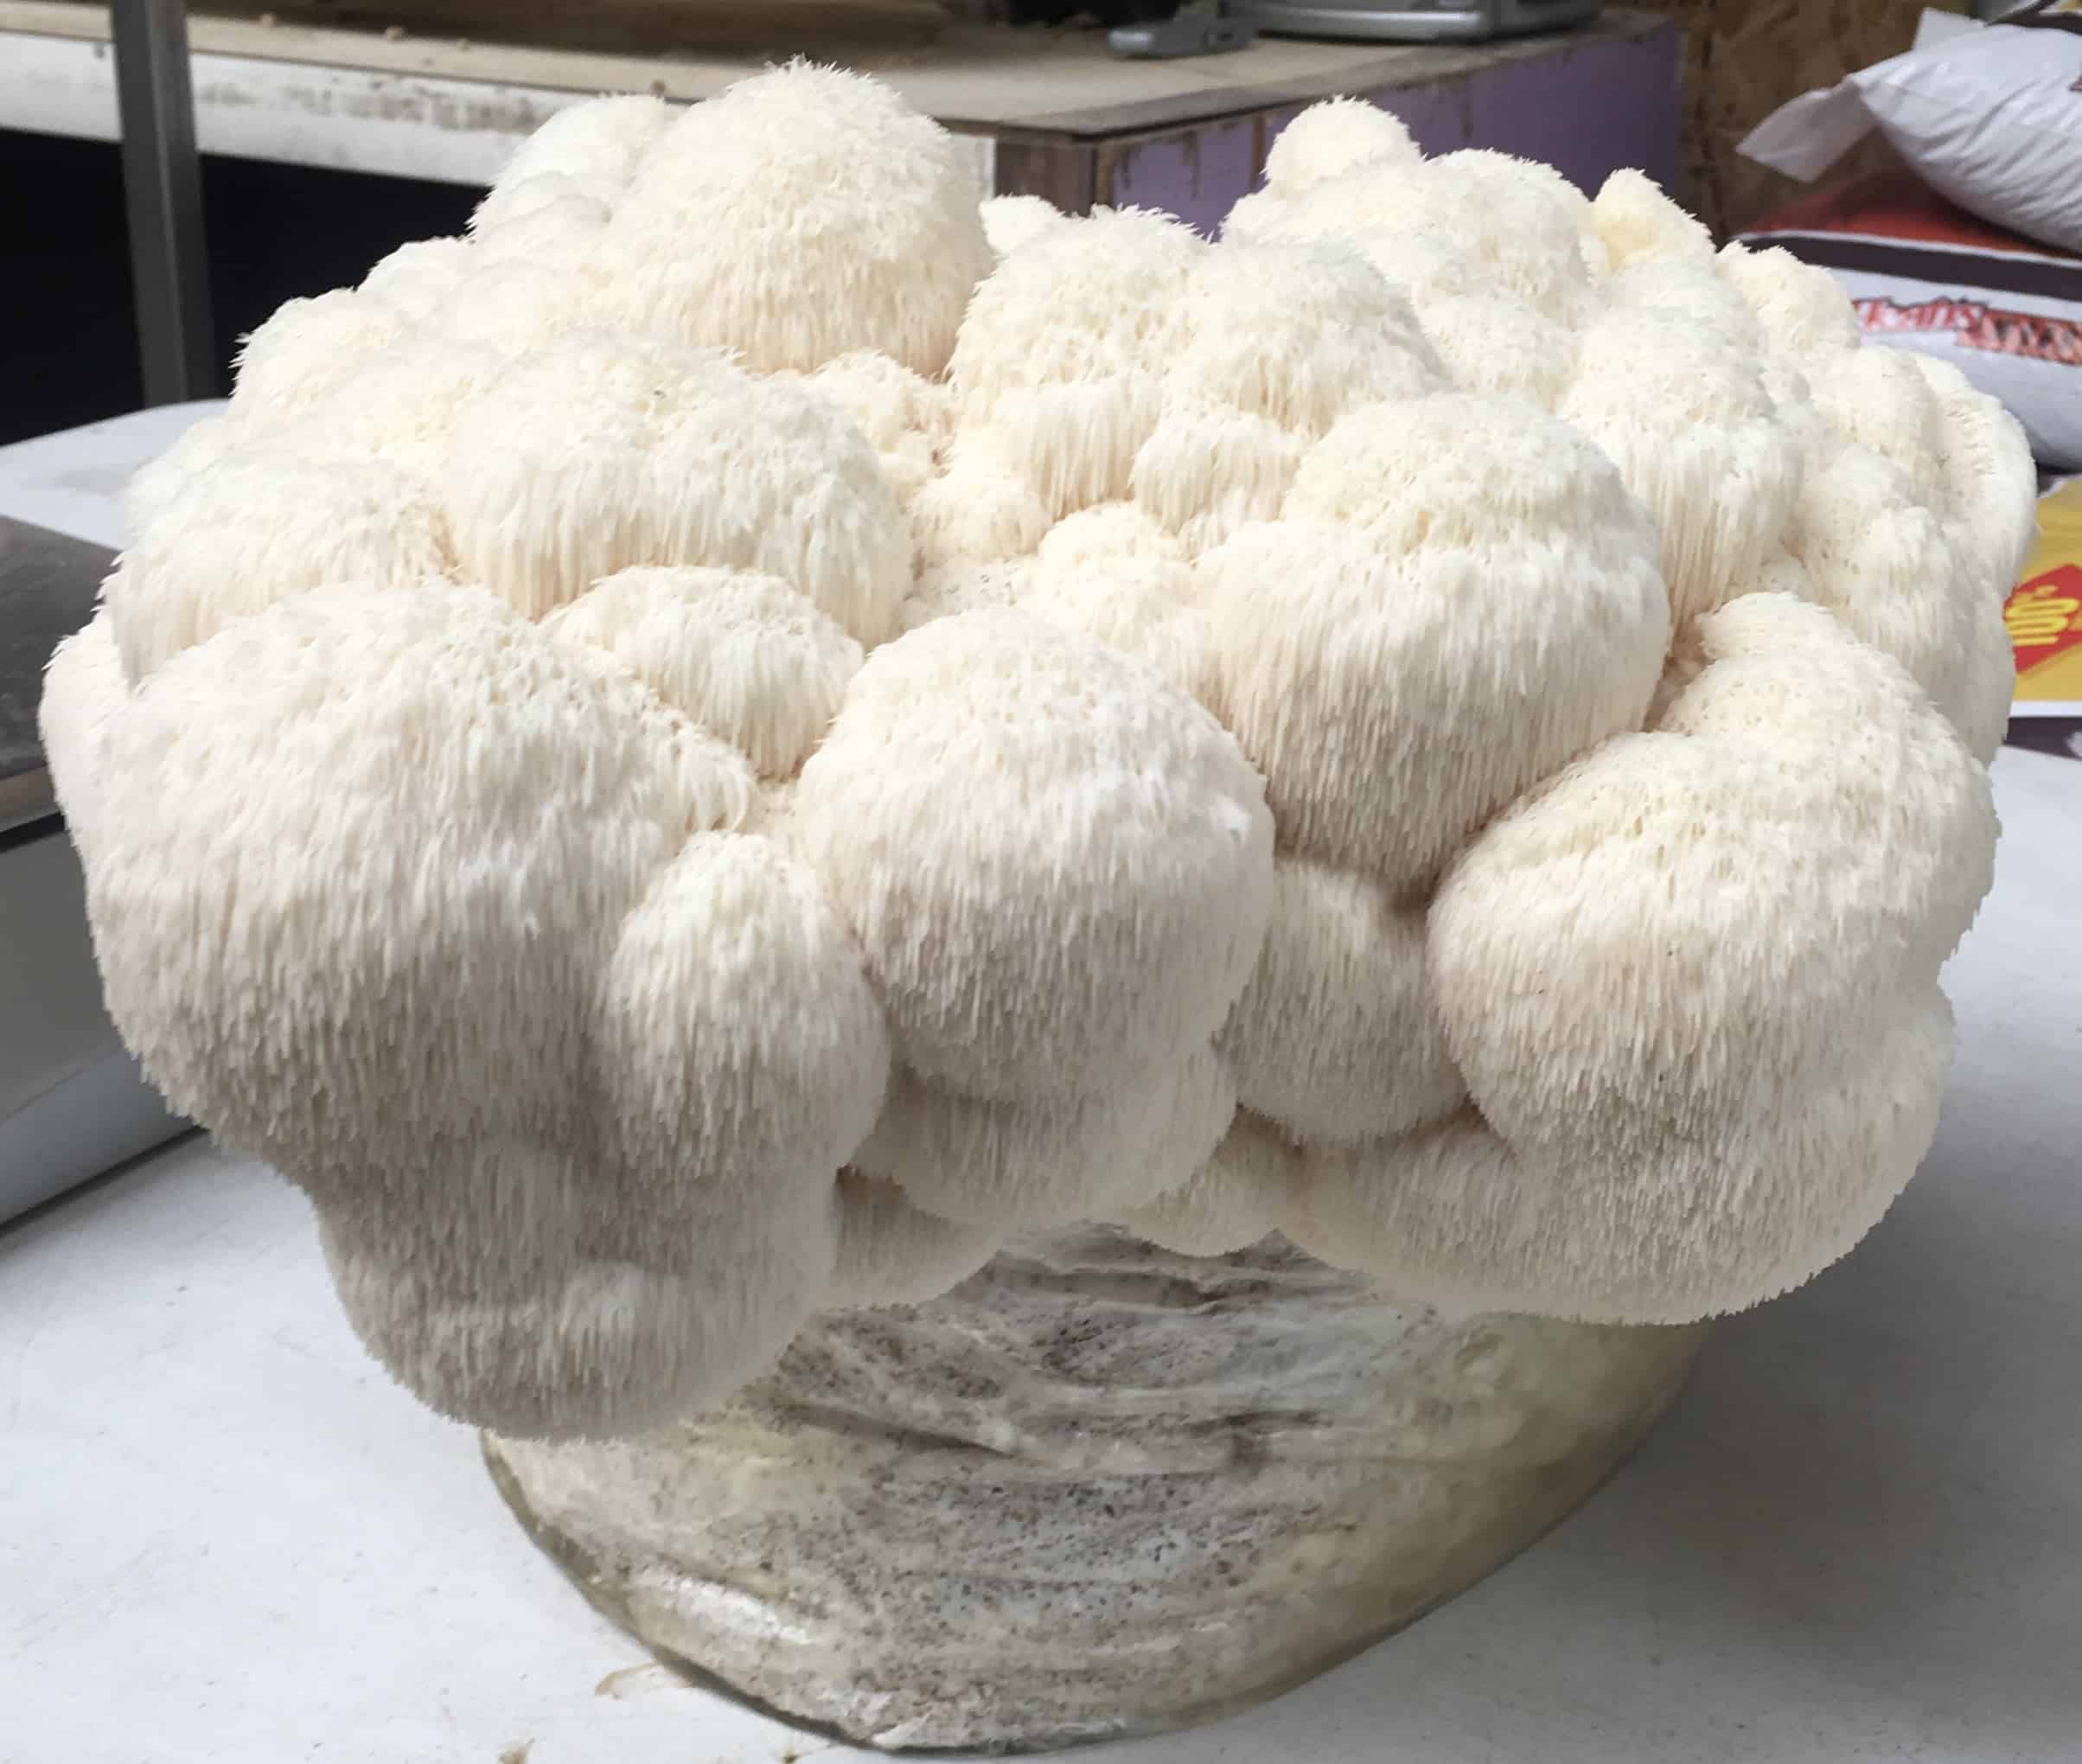 How Gourmet Mushrooms Are Grown